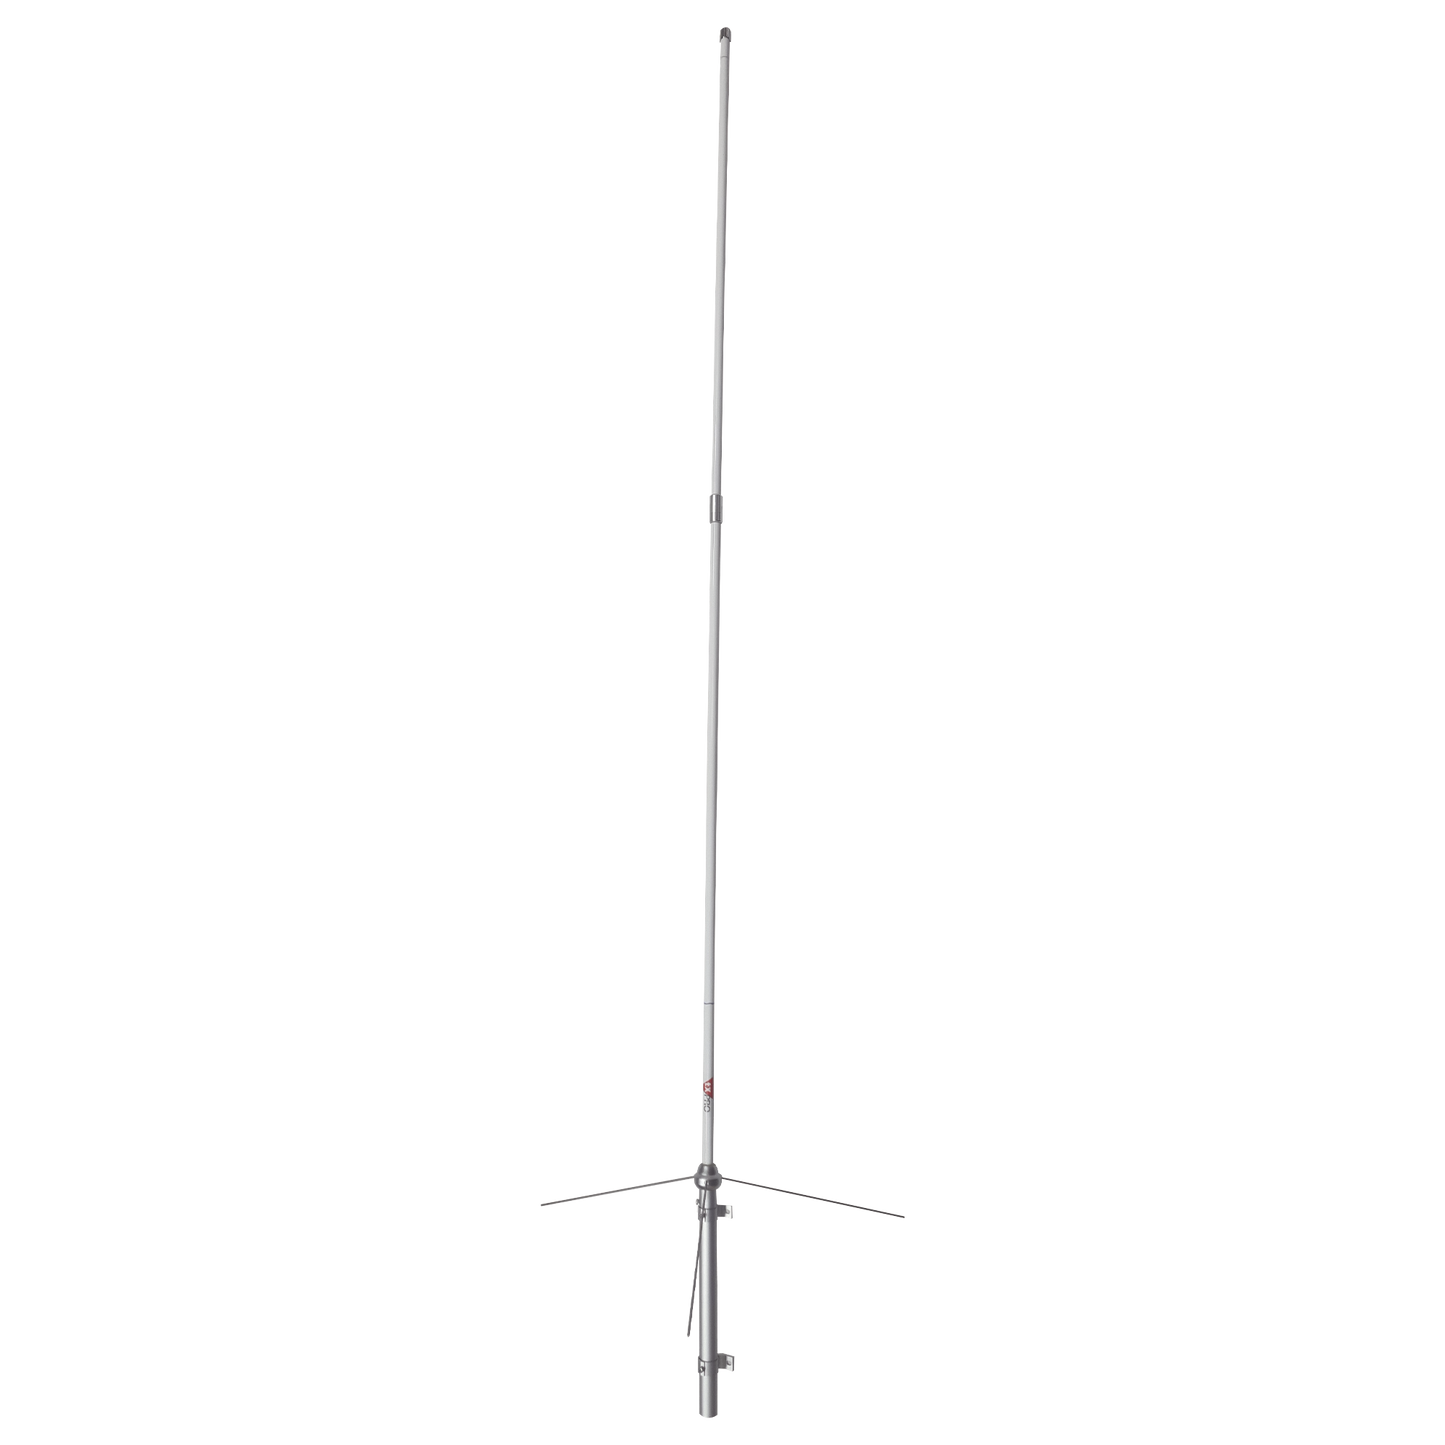 Dual Band Base Antenna, OmniDirectional, Frequency Range 144 - 148 / 430 - 440 MHz.